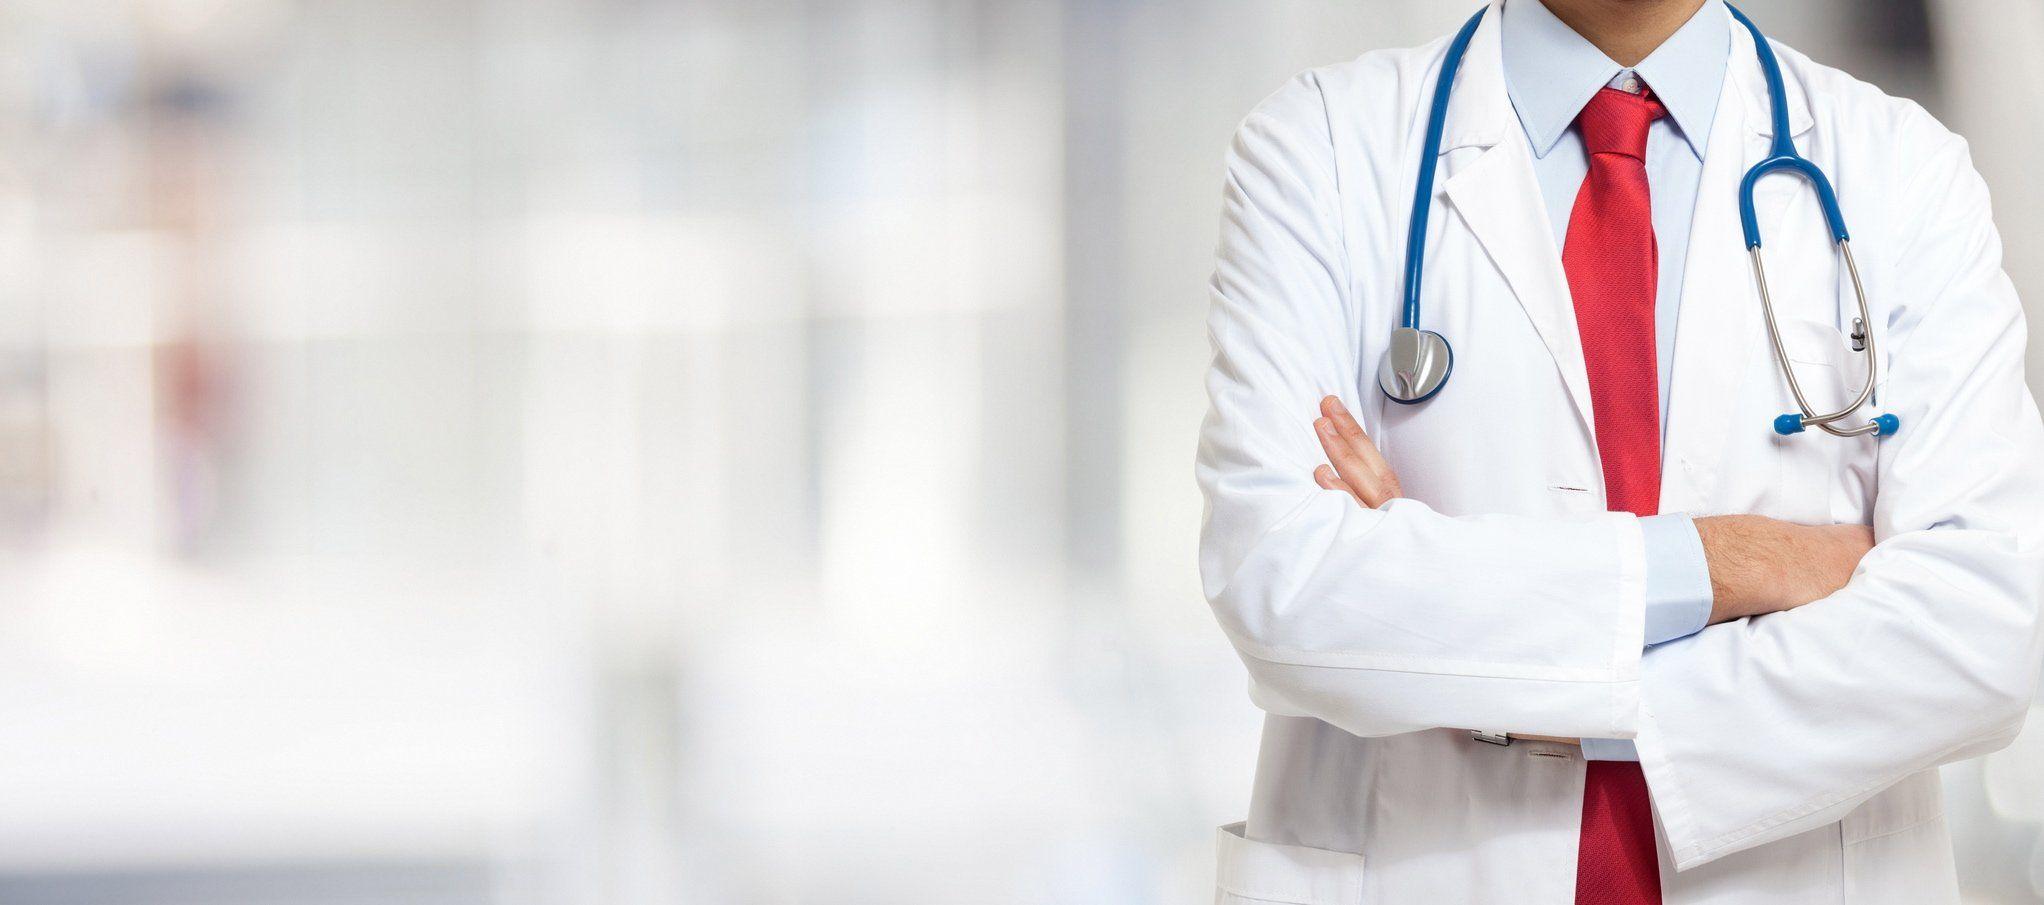 Starting a Medical Practice, 6 Essentials